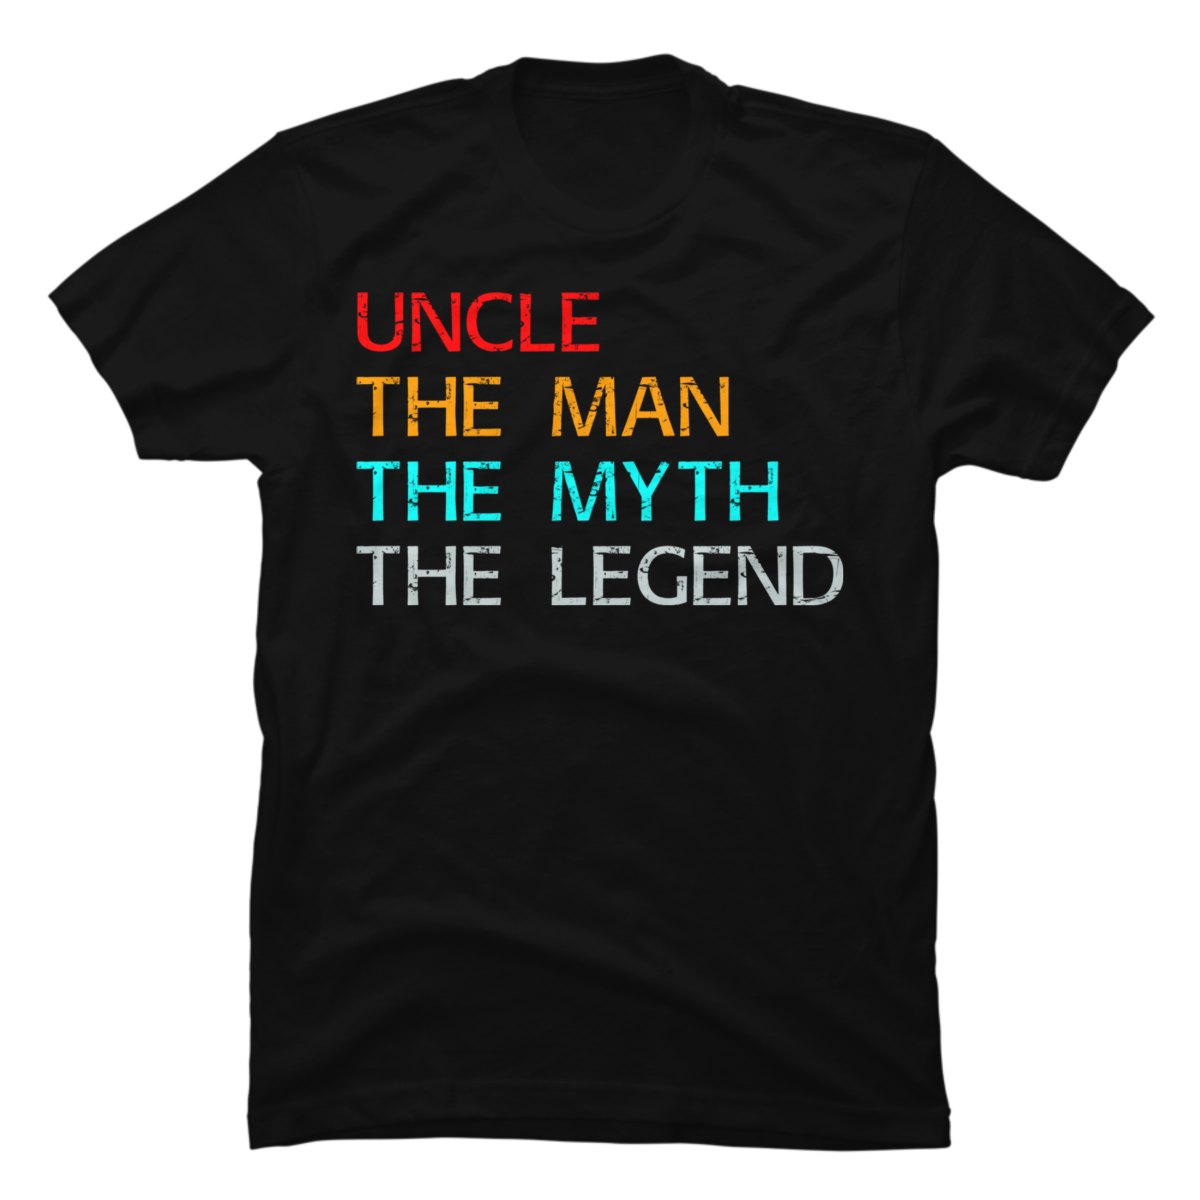 uncle - Buy t-shirt designs